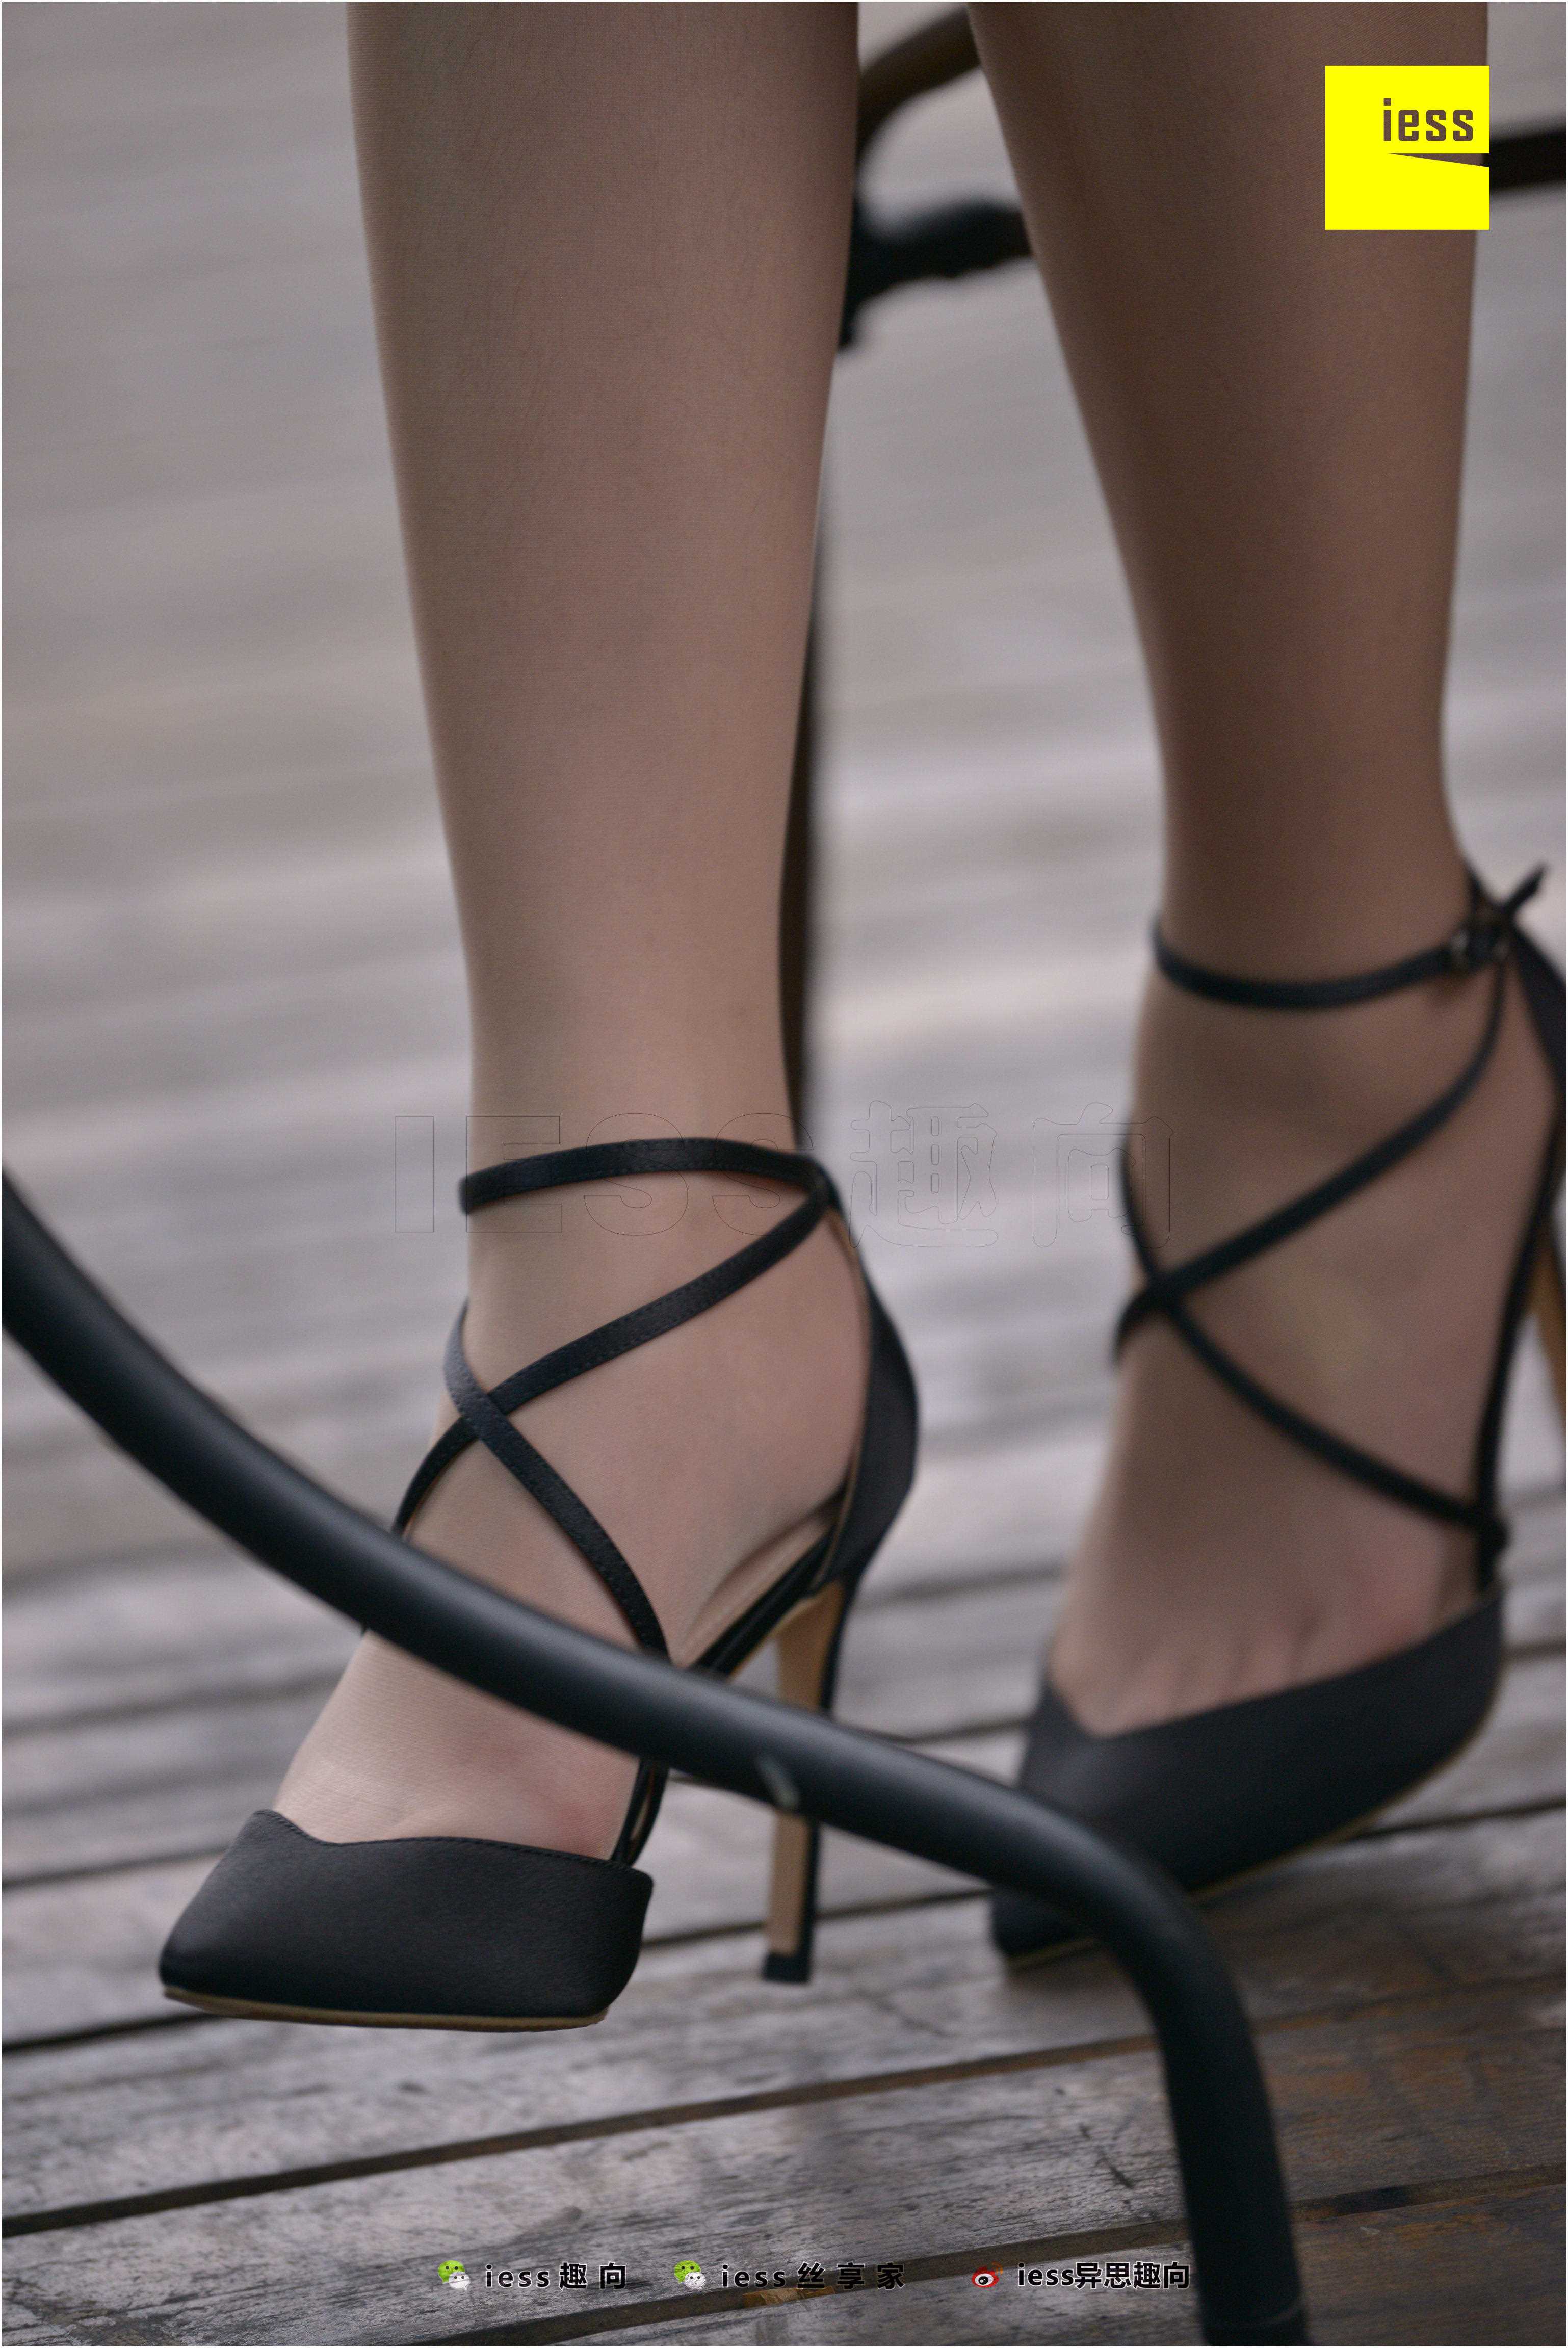 China Beauty Legs and feet 513